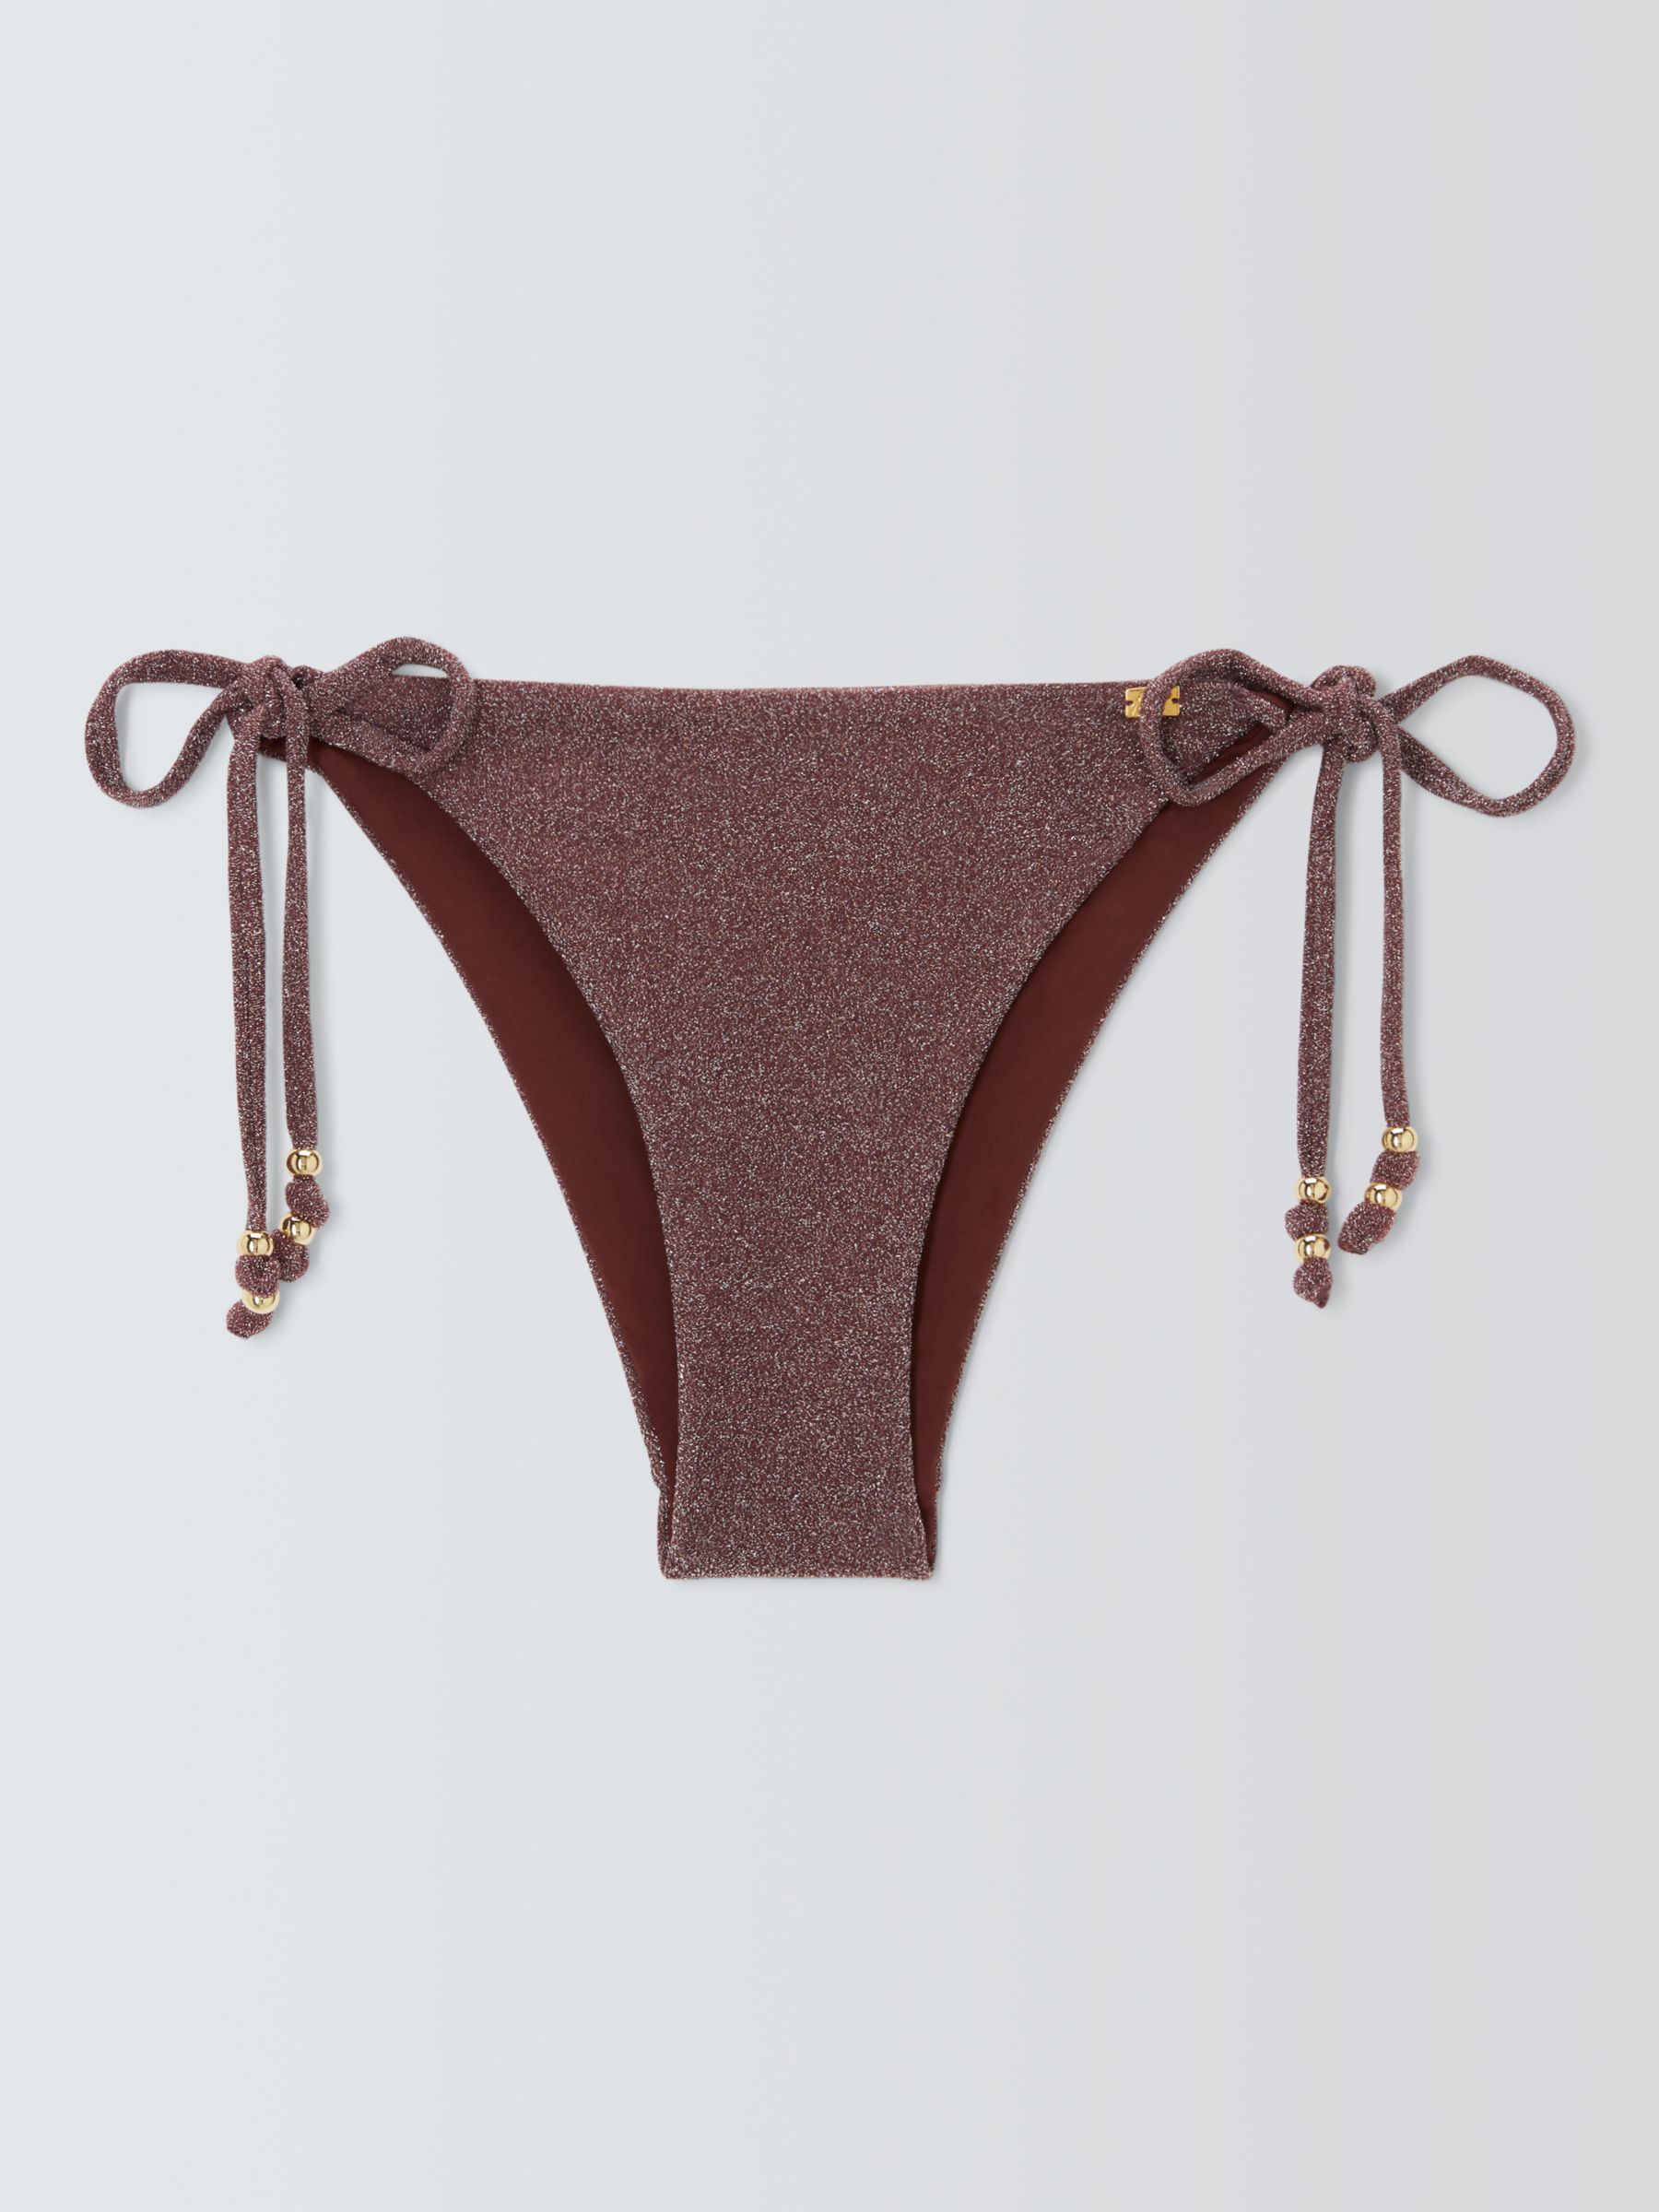 AND/OR Shimmer String Bikini Bottoms, Chocolate, 8